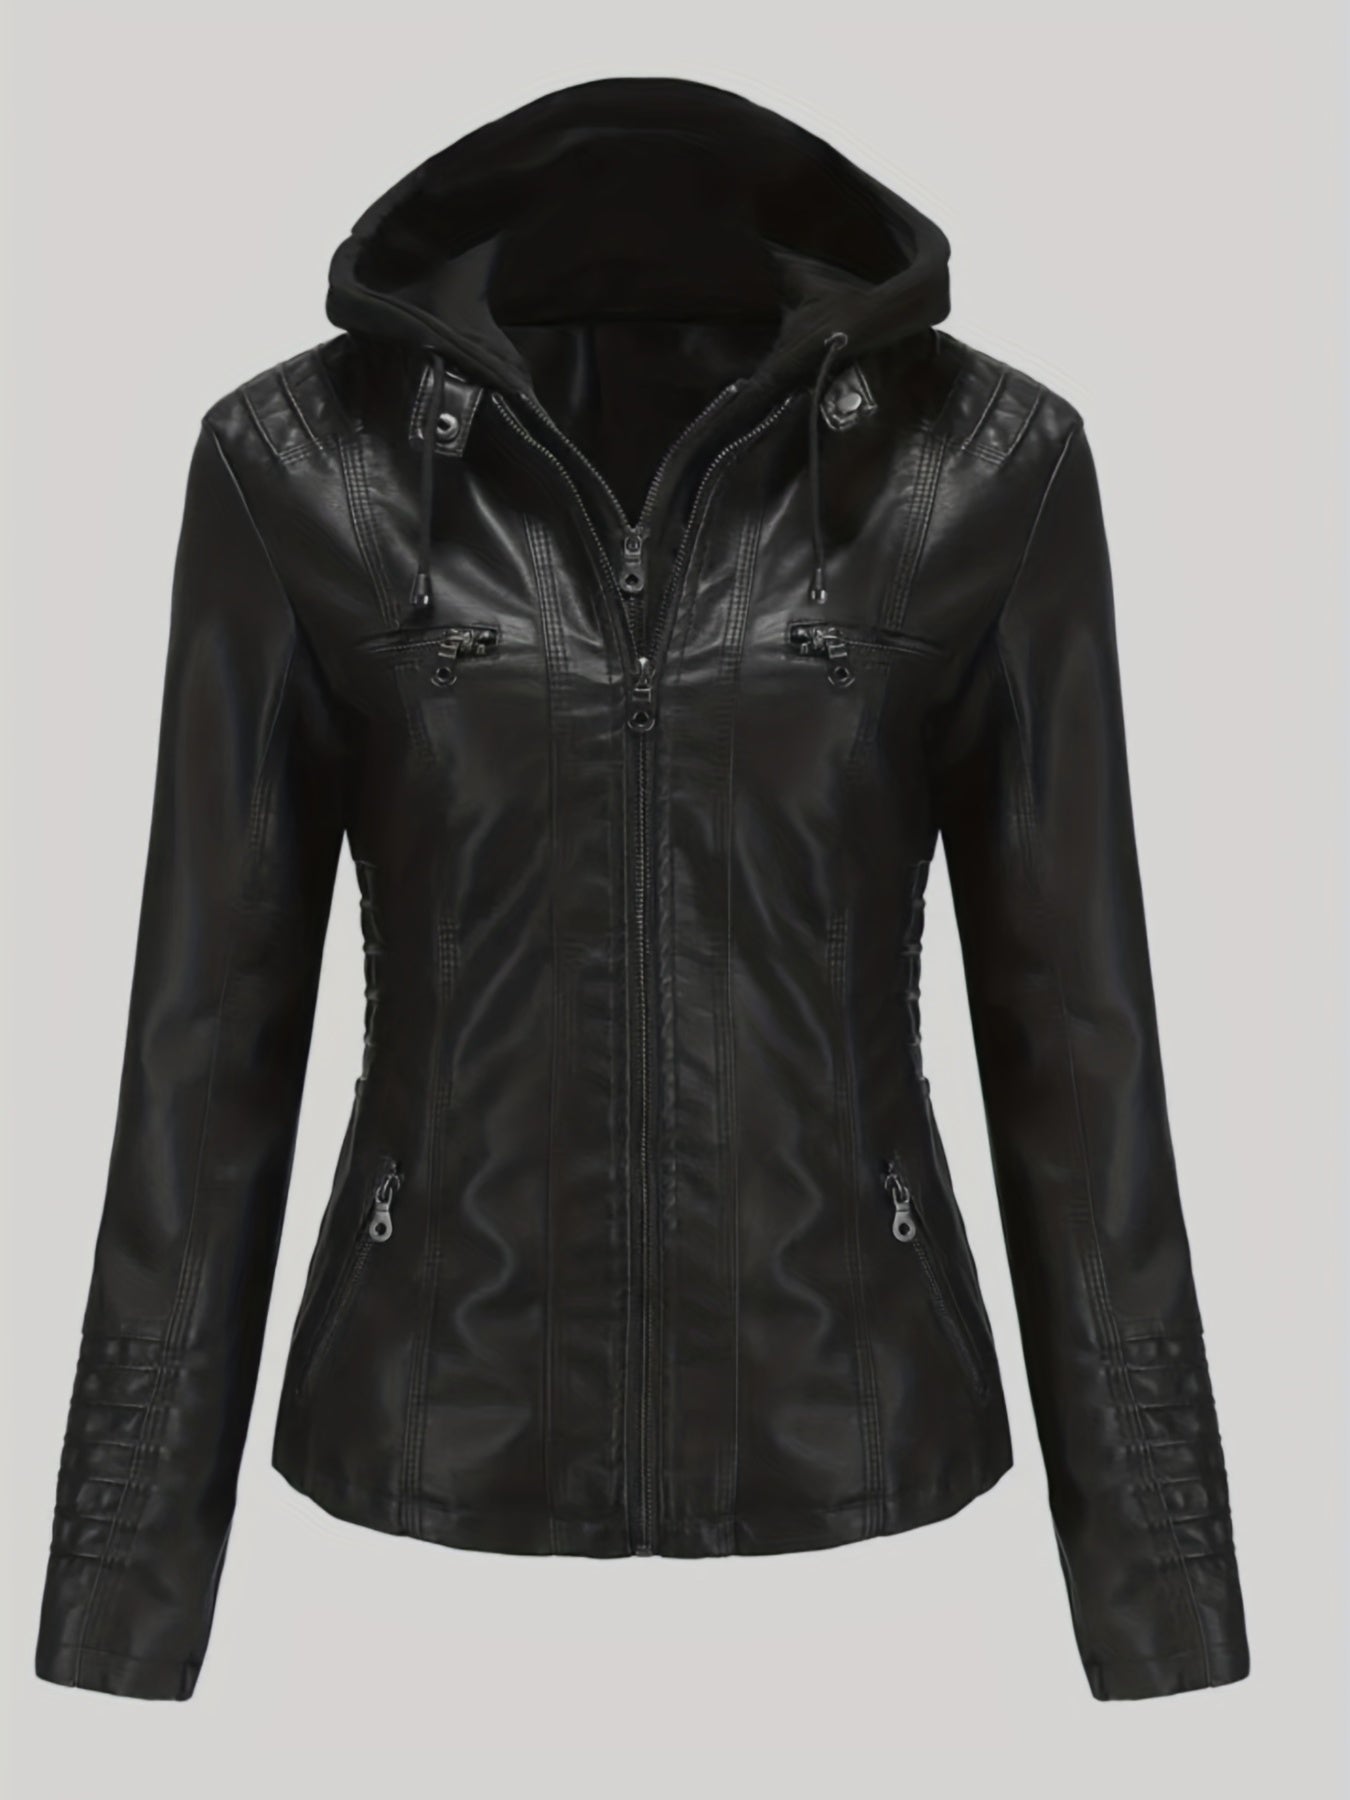 Vzyzv Hooded Faux Leather Jacket, Casual Zipper Long Sleeve Outerwear, Women's Clothing